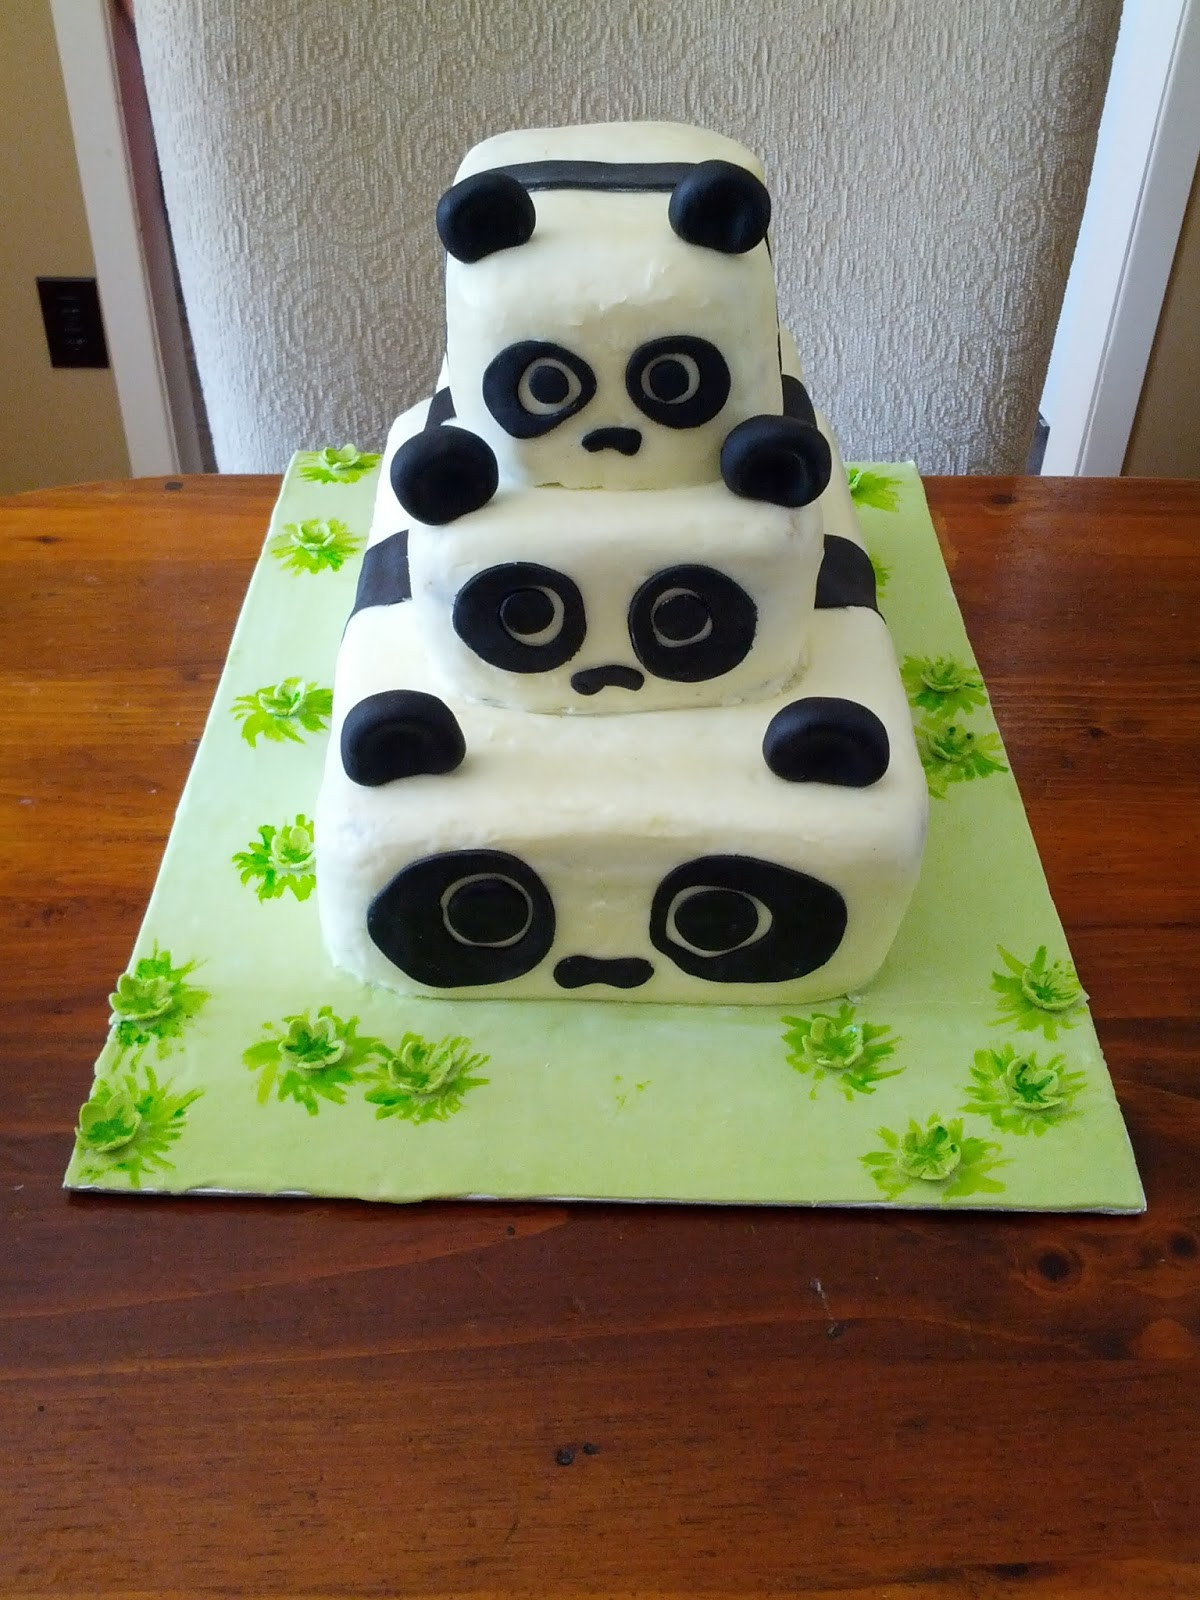 Best ideas about Panda Birthday Cake
. Save or Pin Second Generation Cake Design Panda Birthday Cake Now.